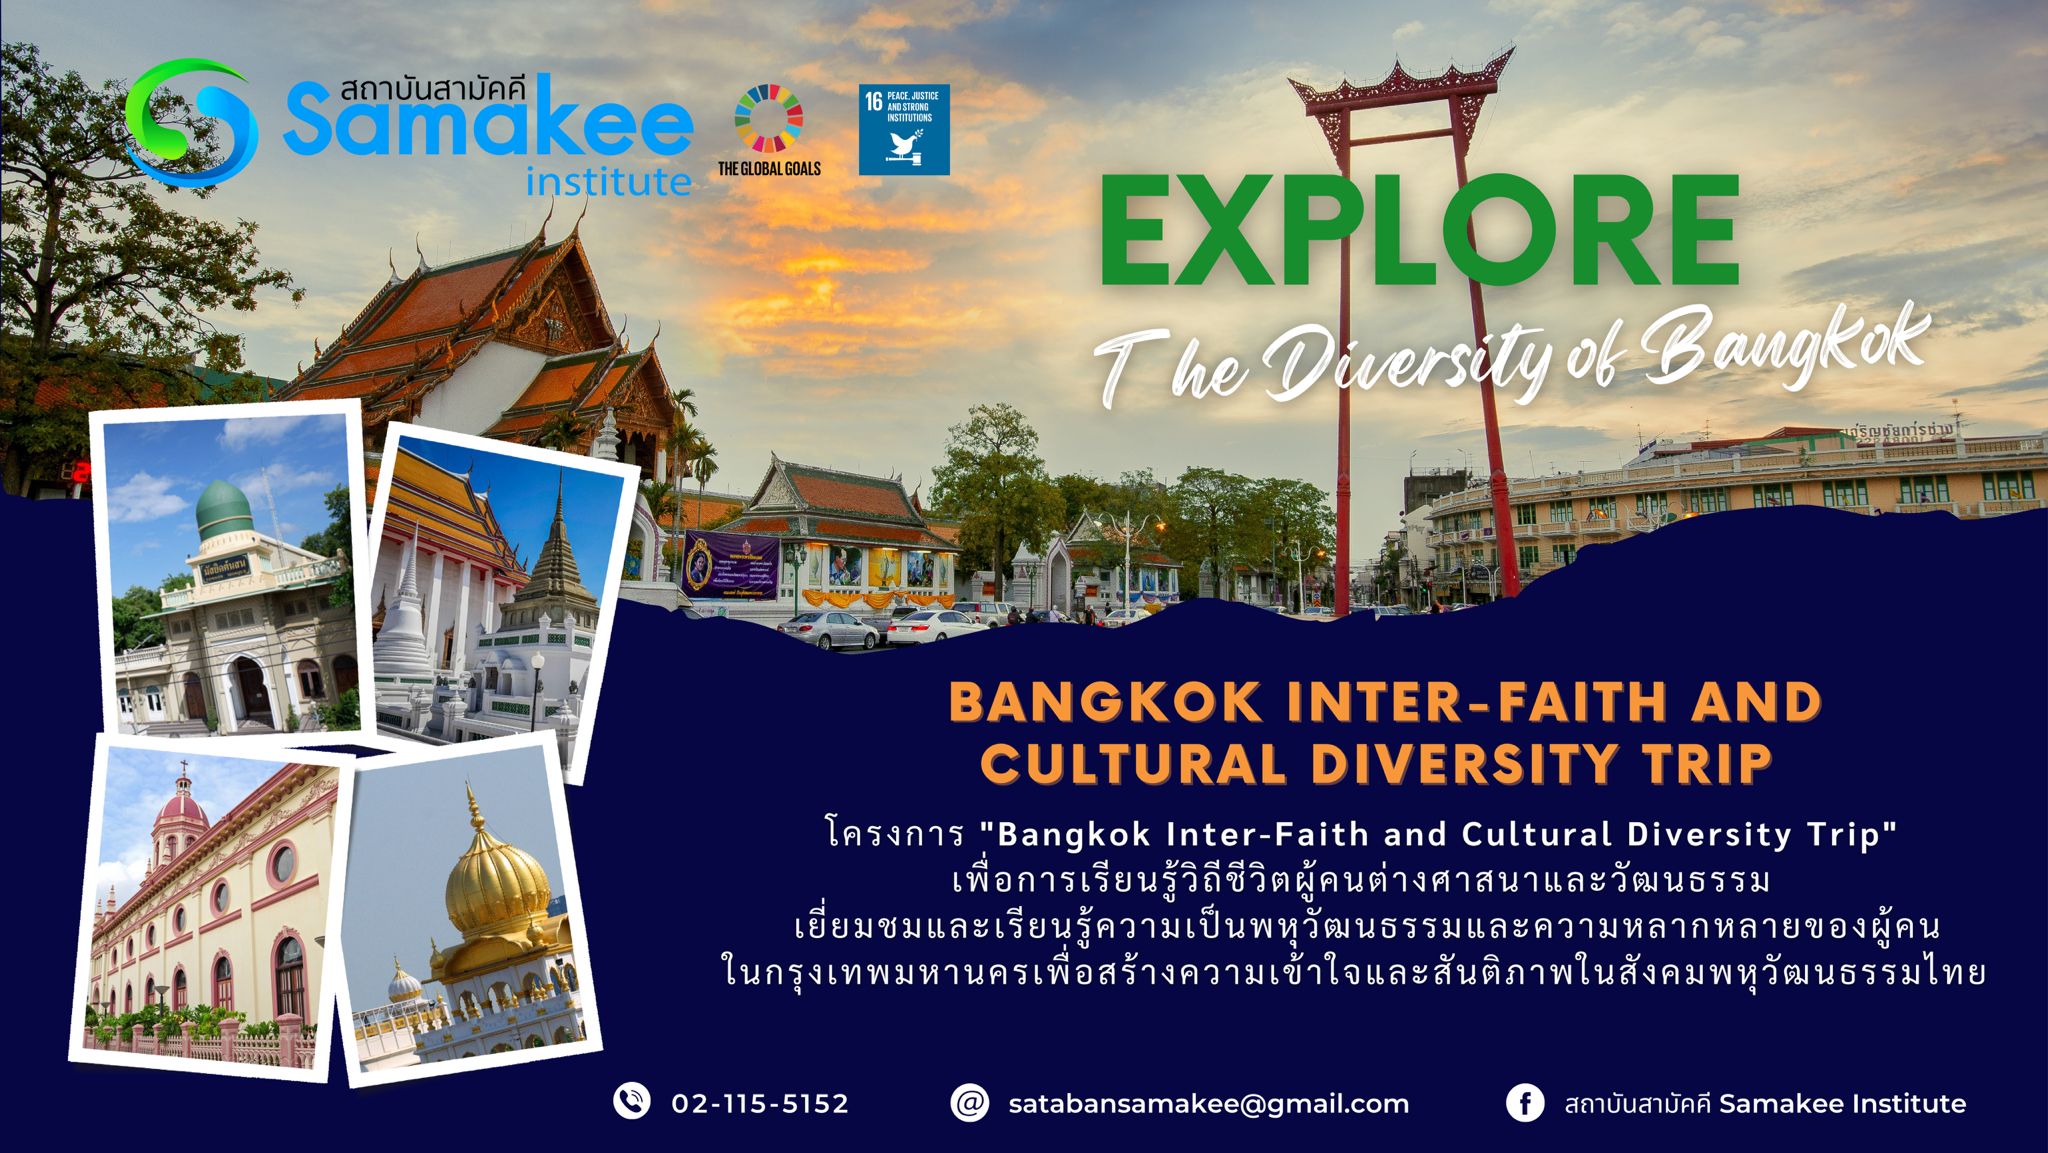 Bangkok Inter-Faith and Cultural Diversity Trip